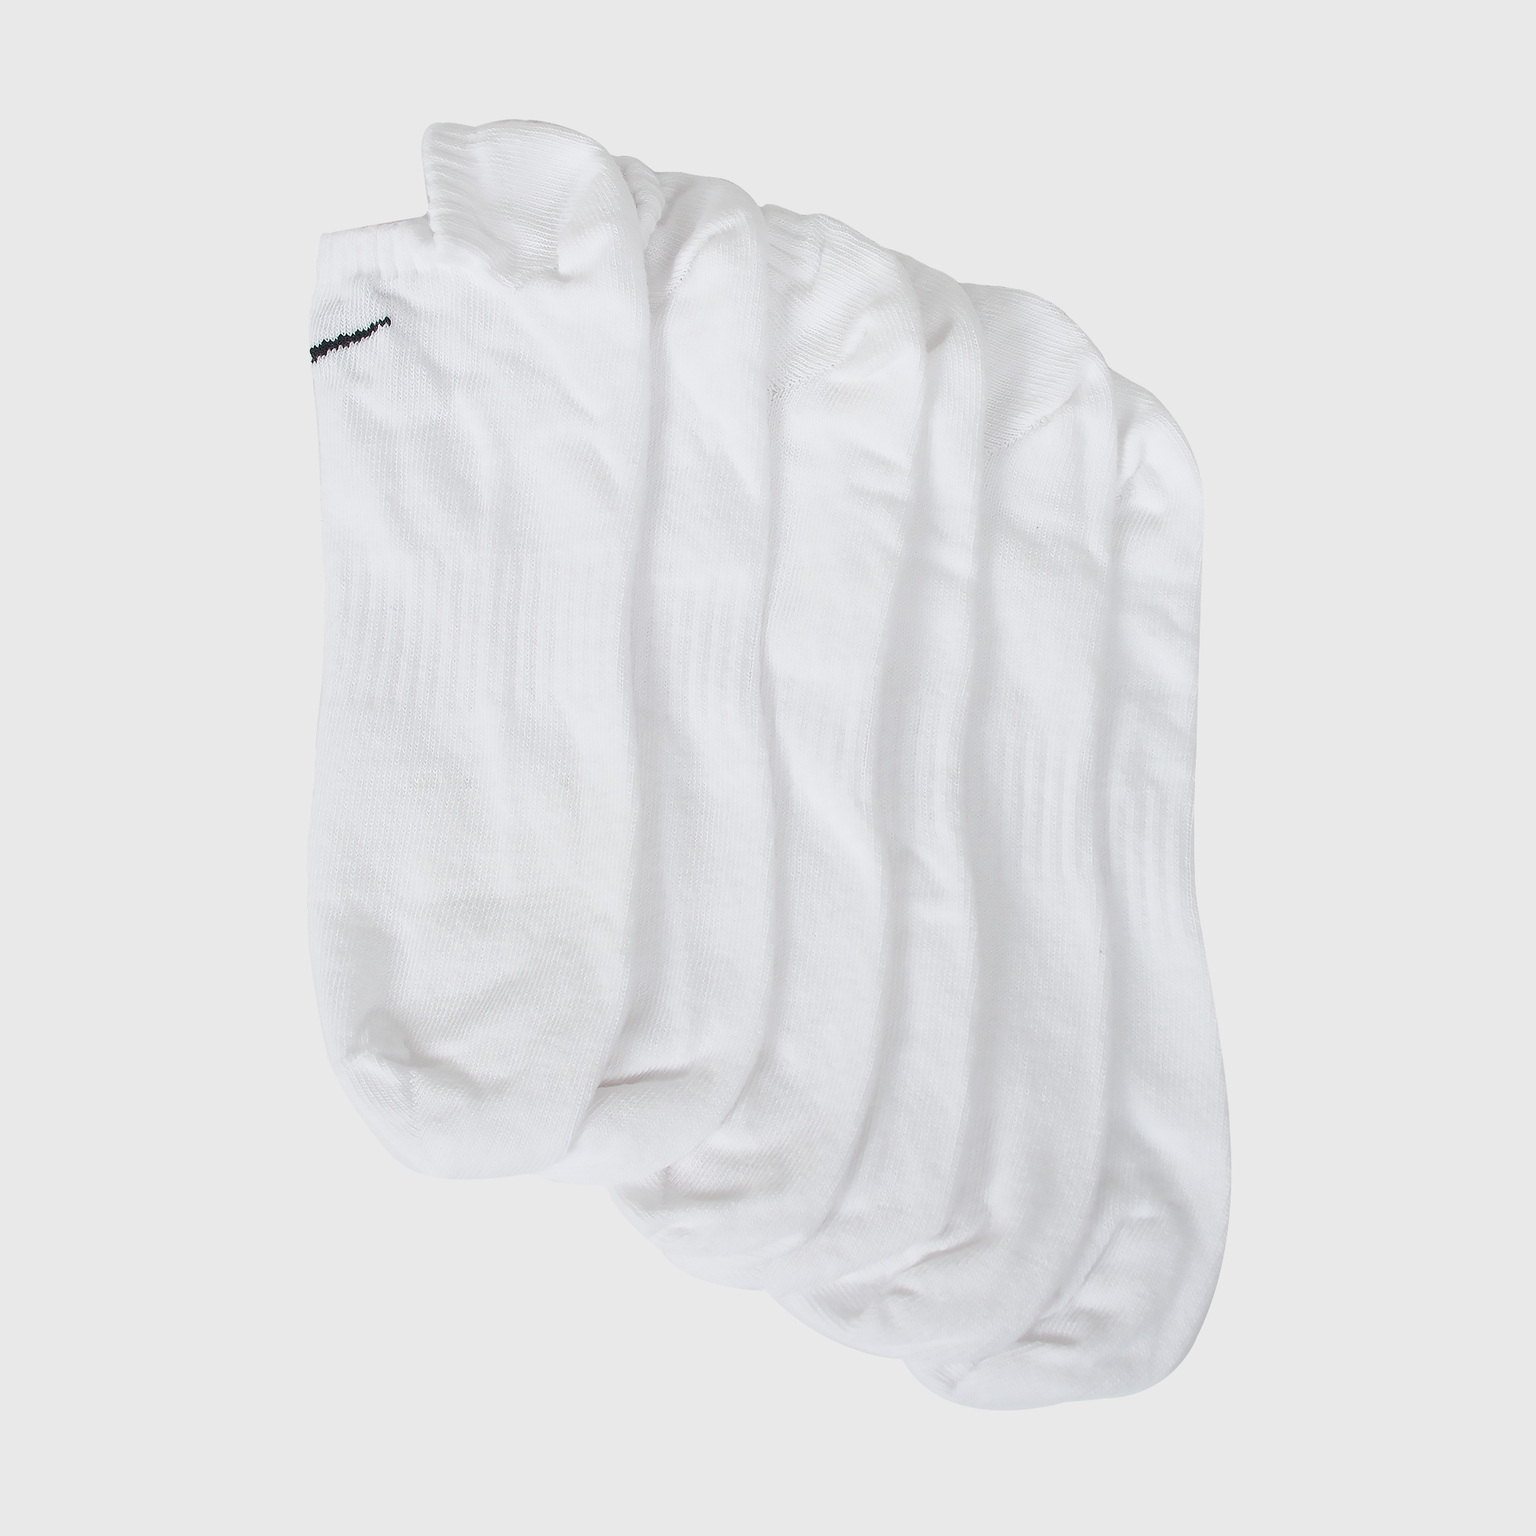 Комплект носков (3 пары) Nike Everyday SX7678-100 